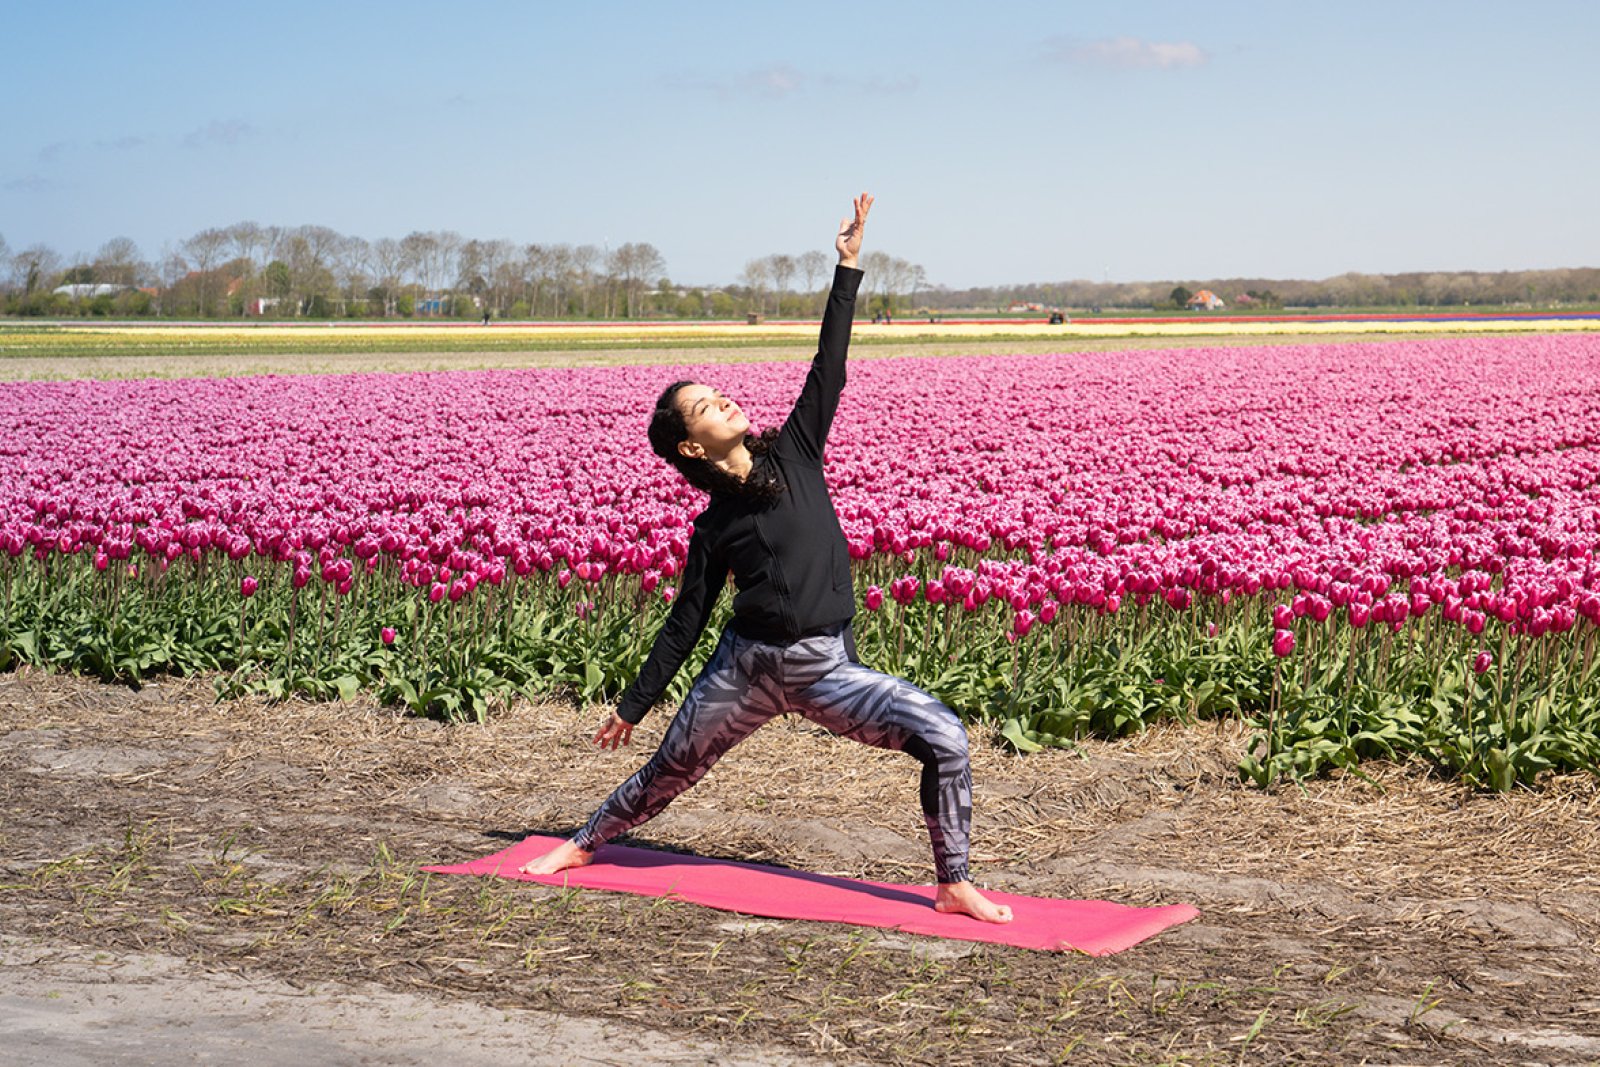 Yoga along the tulip field